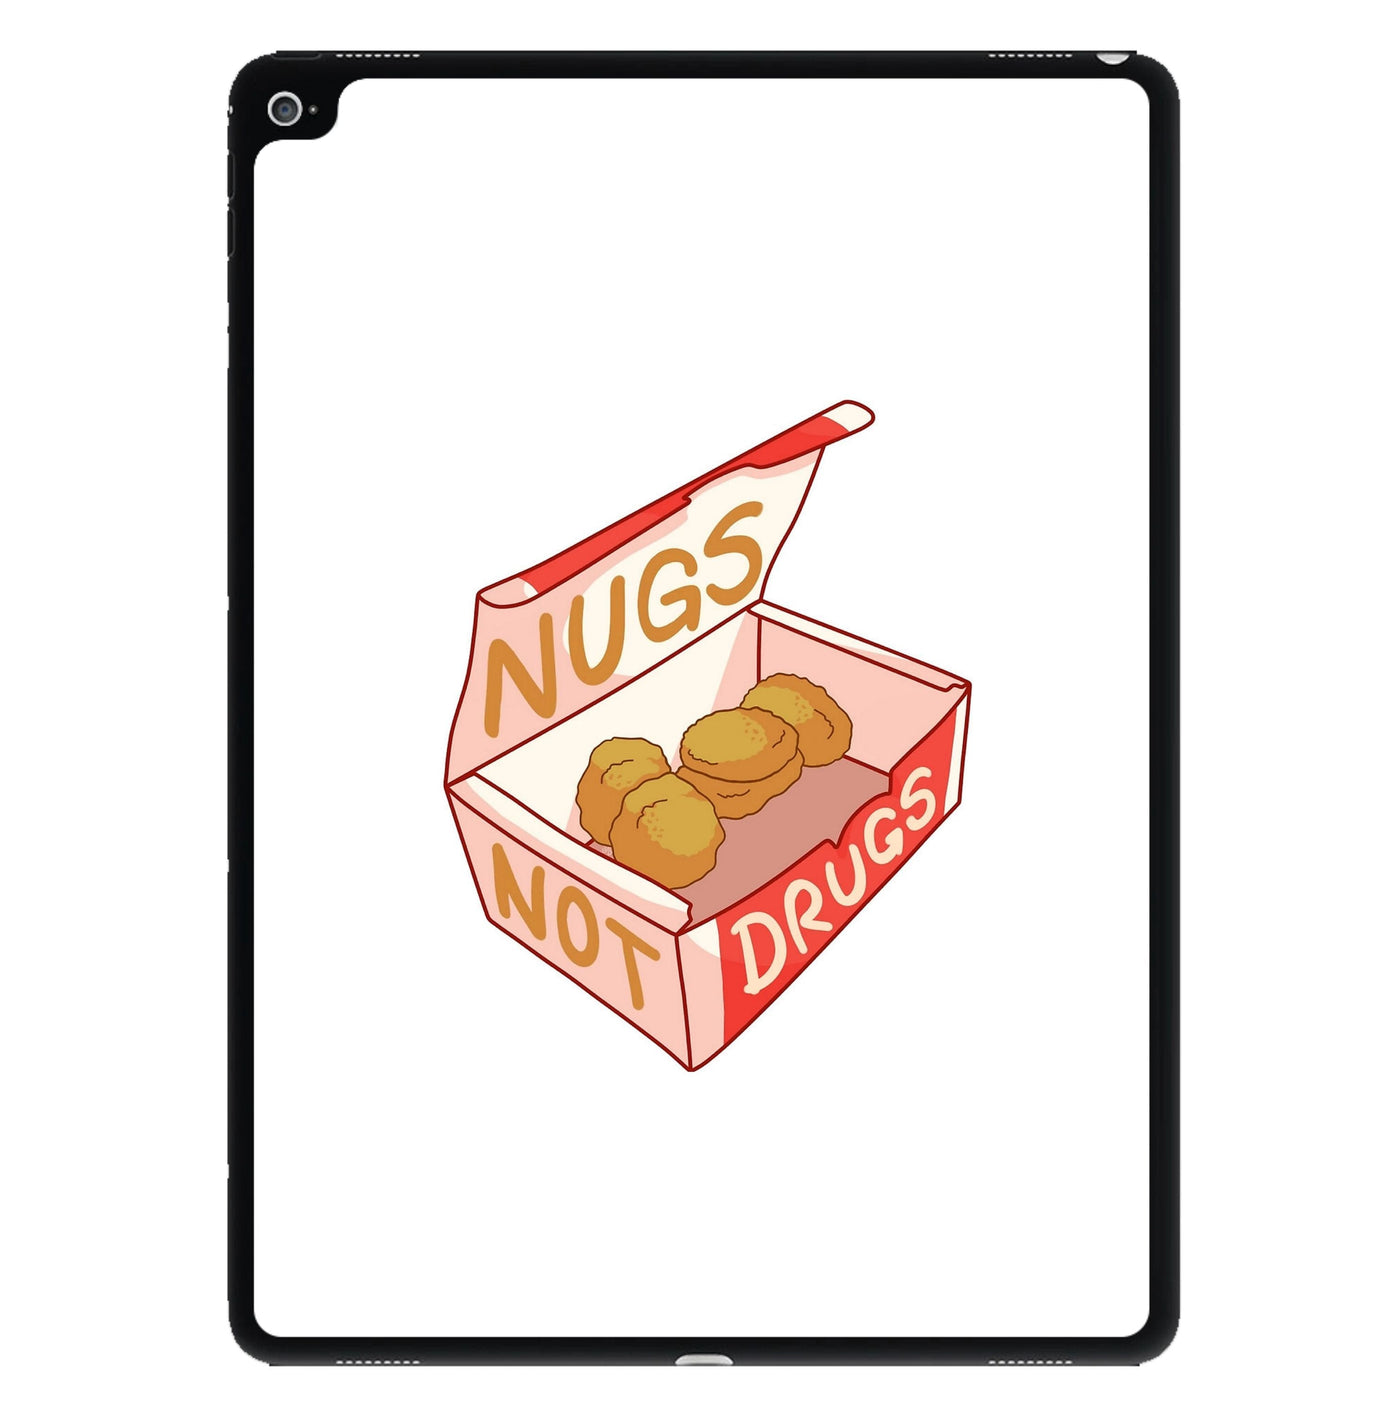 Nugs not Drugs Tumblr Style iPad Case